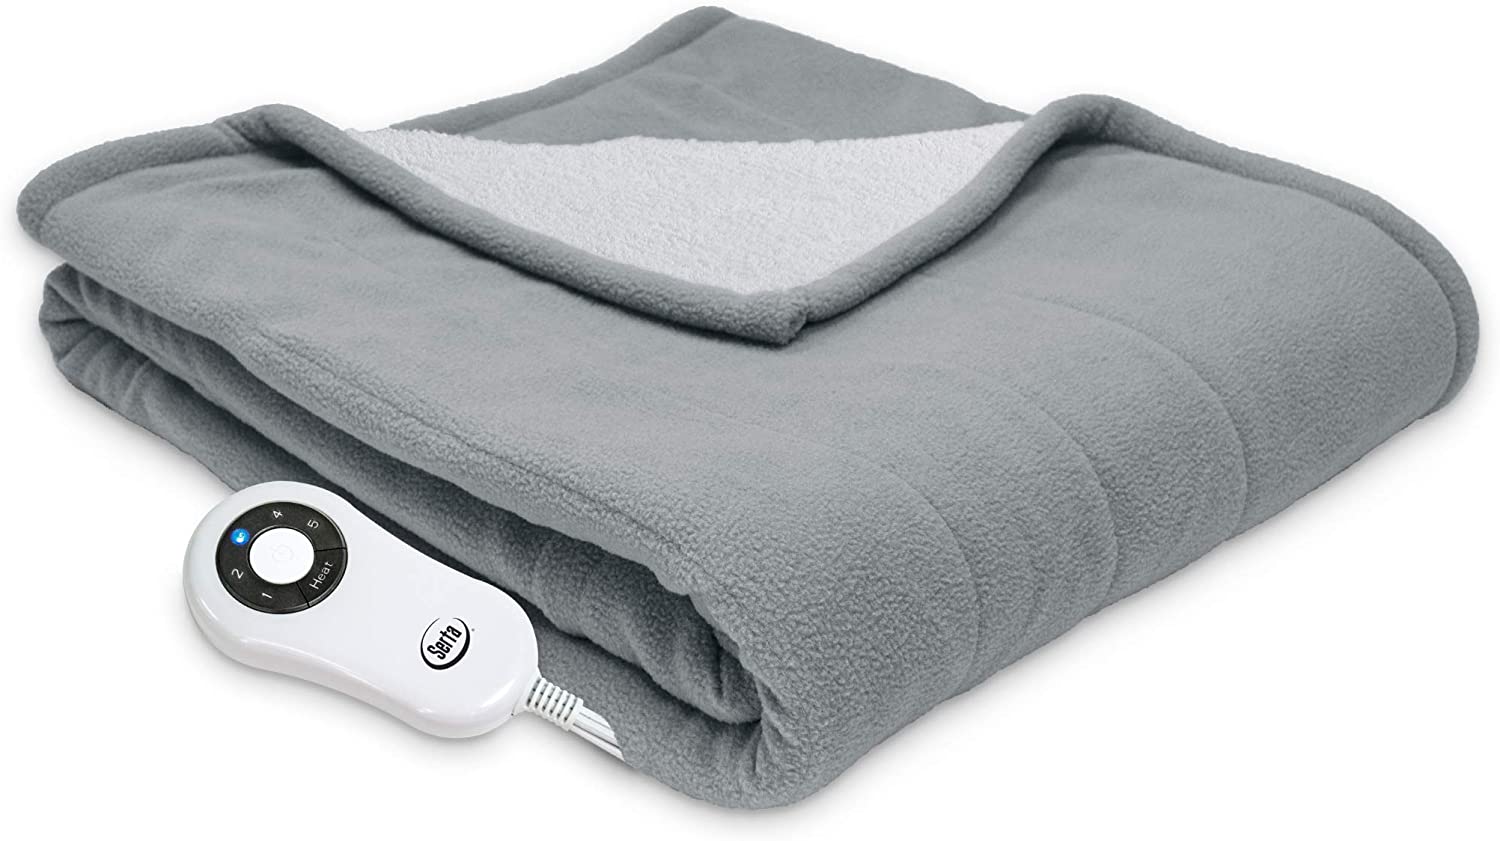 Serta Microplush Adjustable Heat Electric Blanket